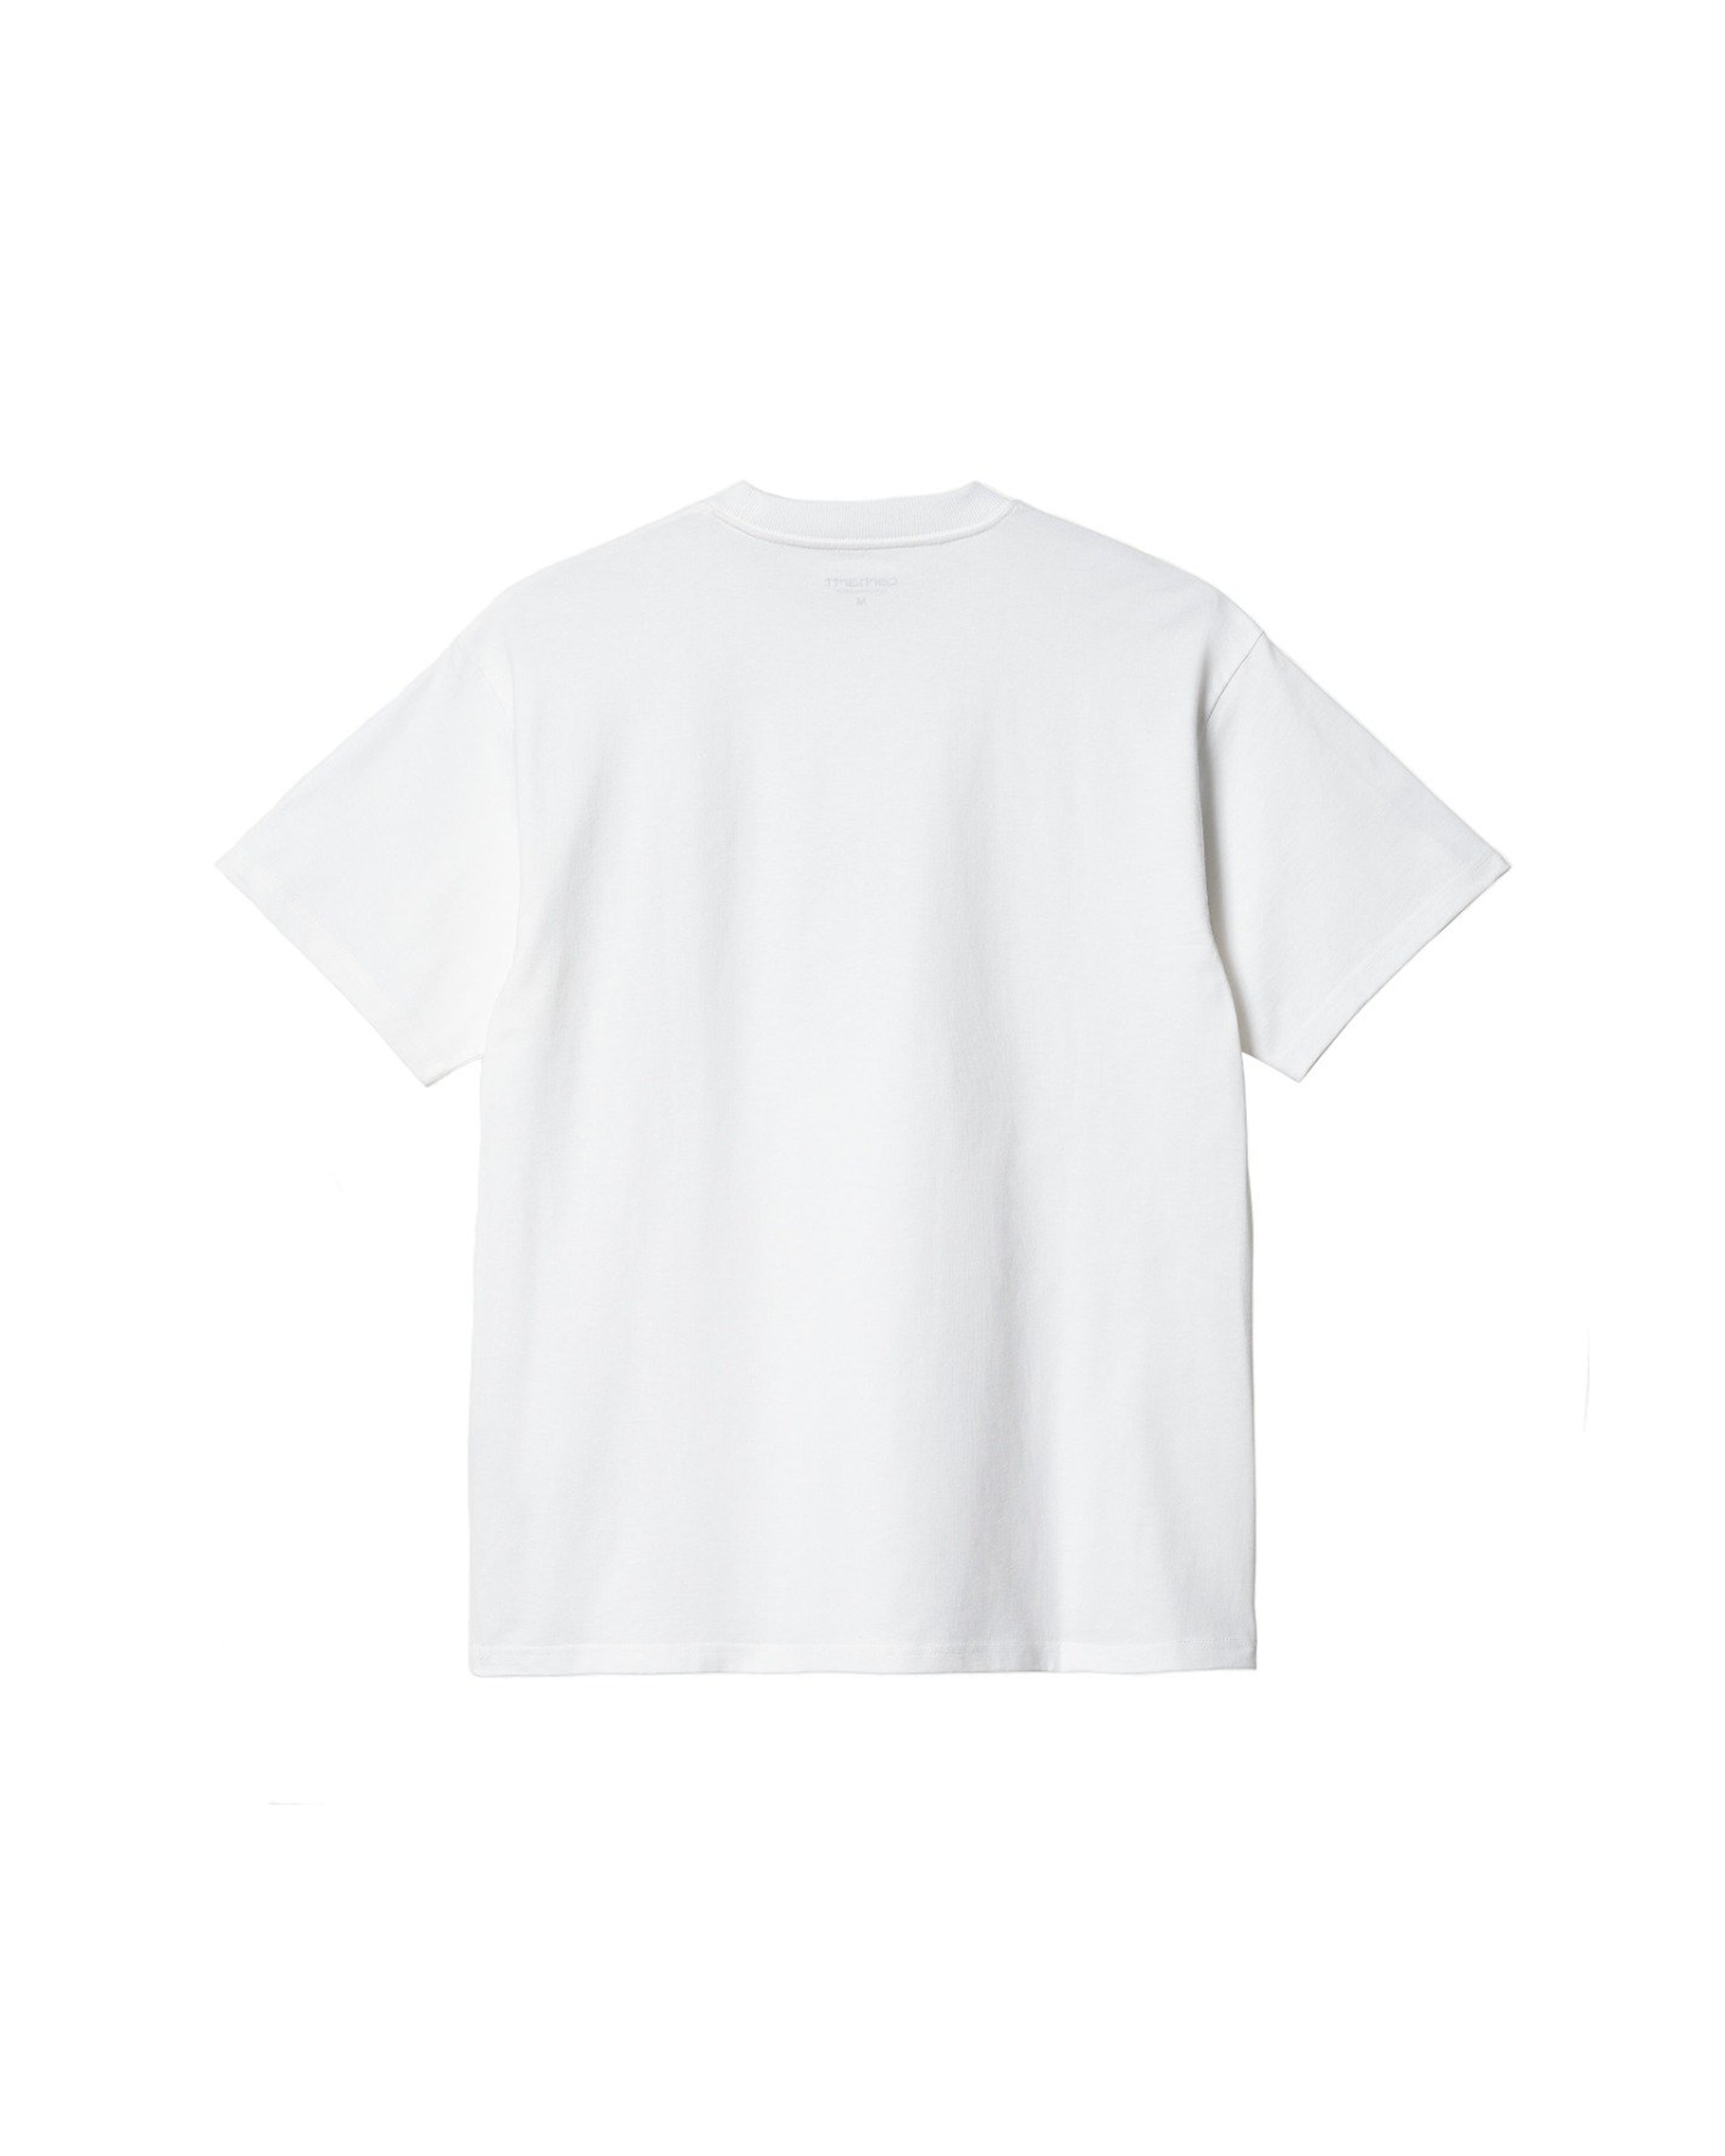 Antleaf T-Shirt - White